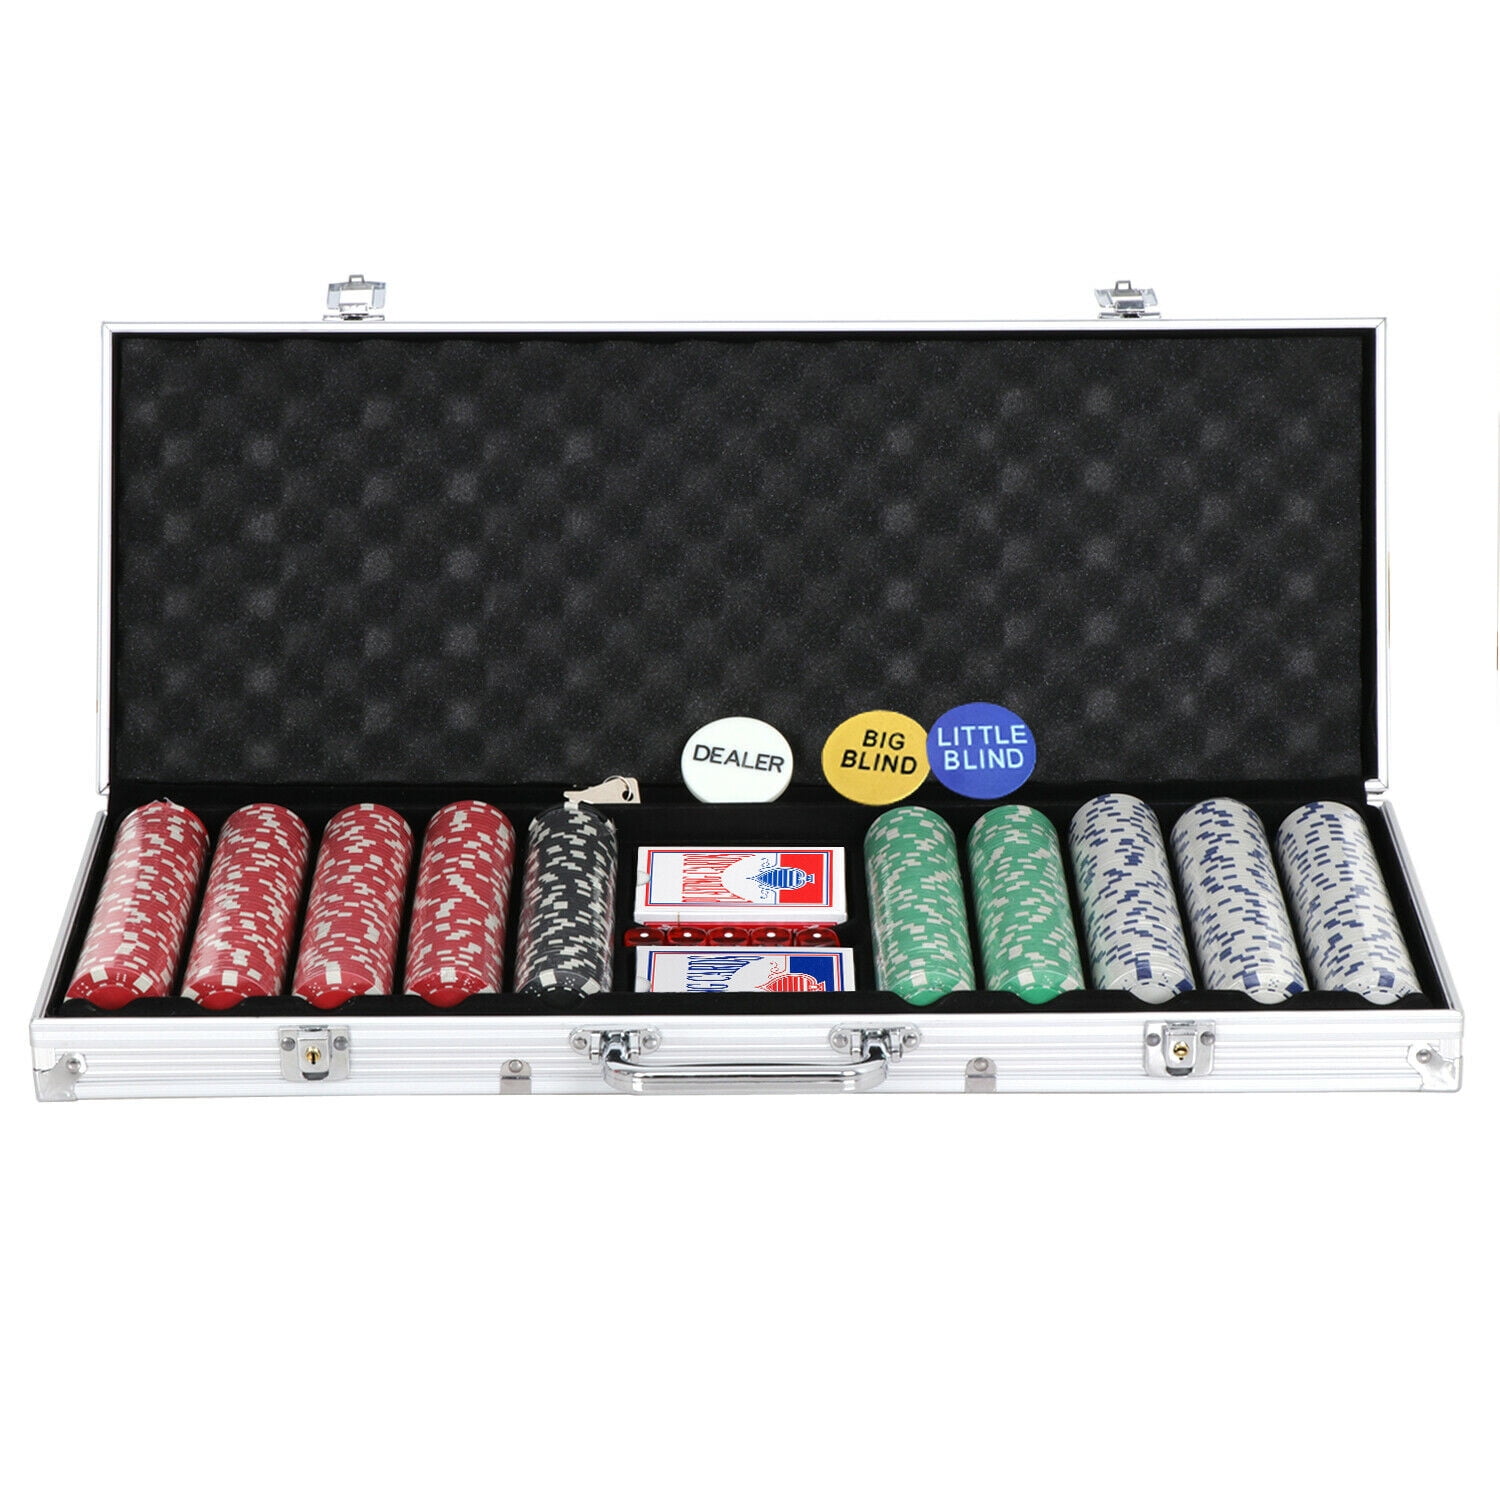 Casino Quality All Metal Poker Drop Slide